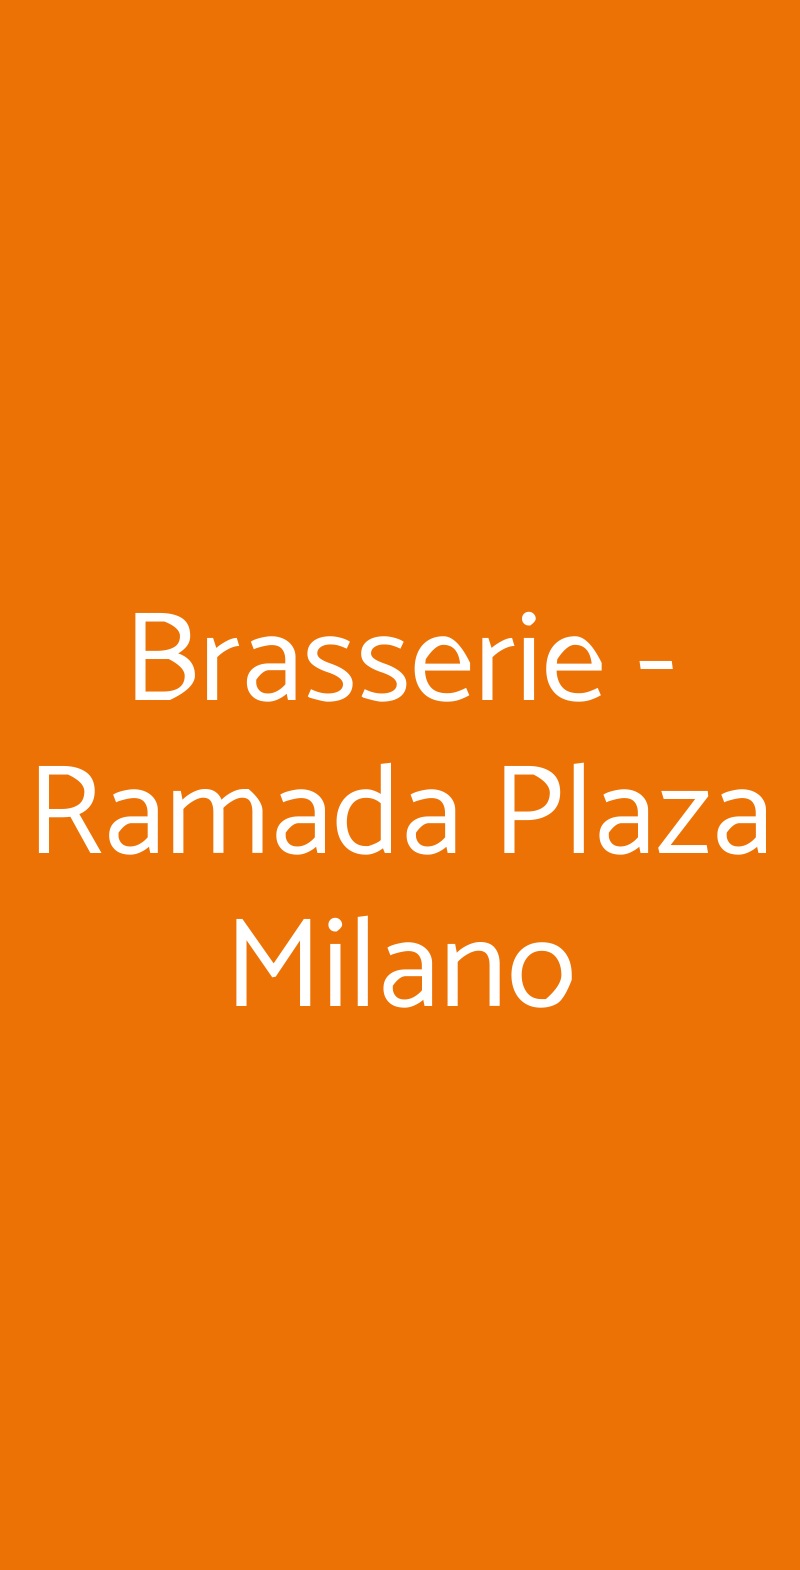 Brasserie - Ramada Plaza Milano Milano menù 1 pagina